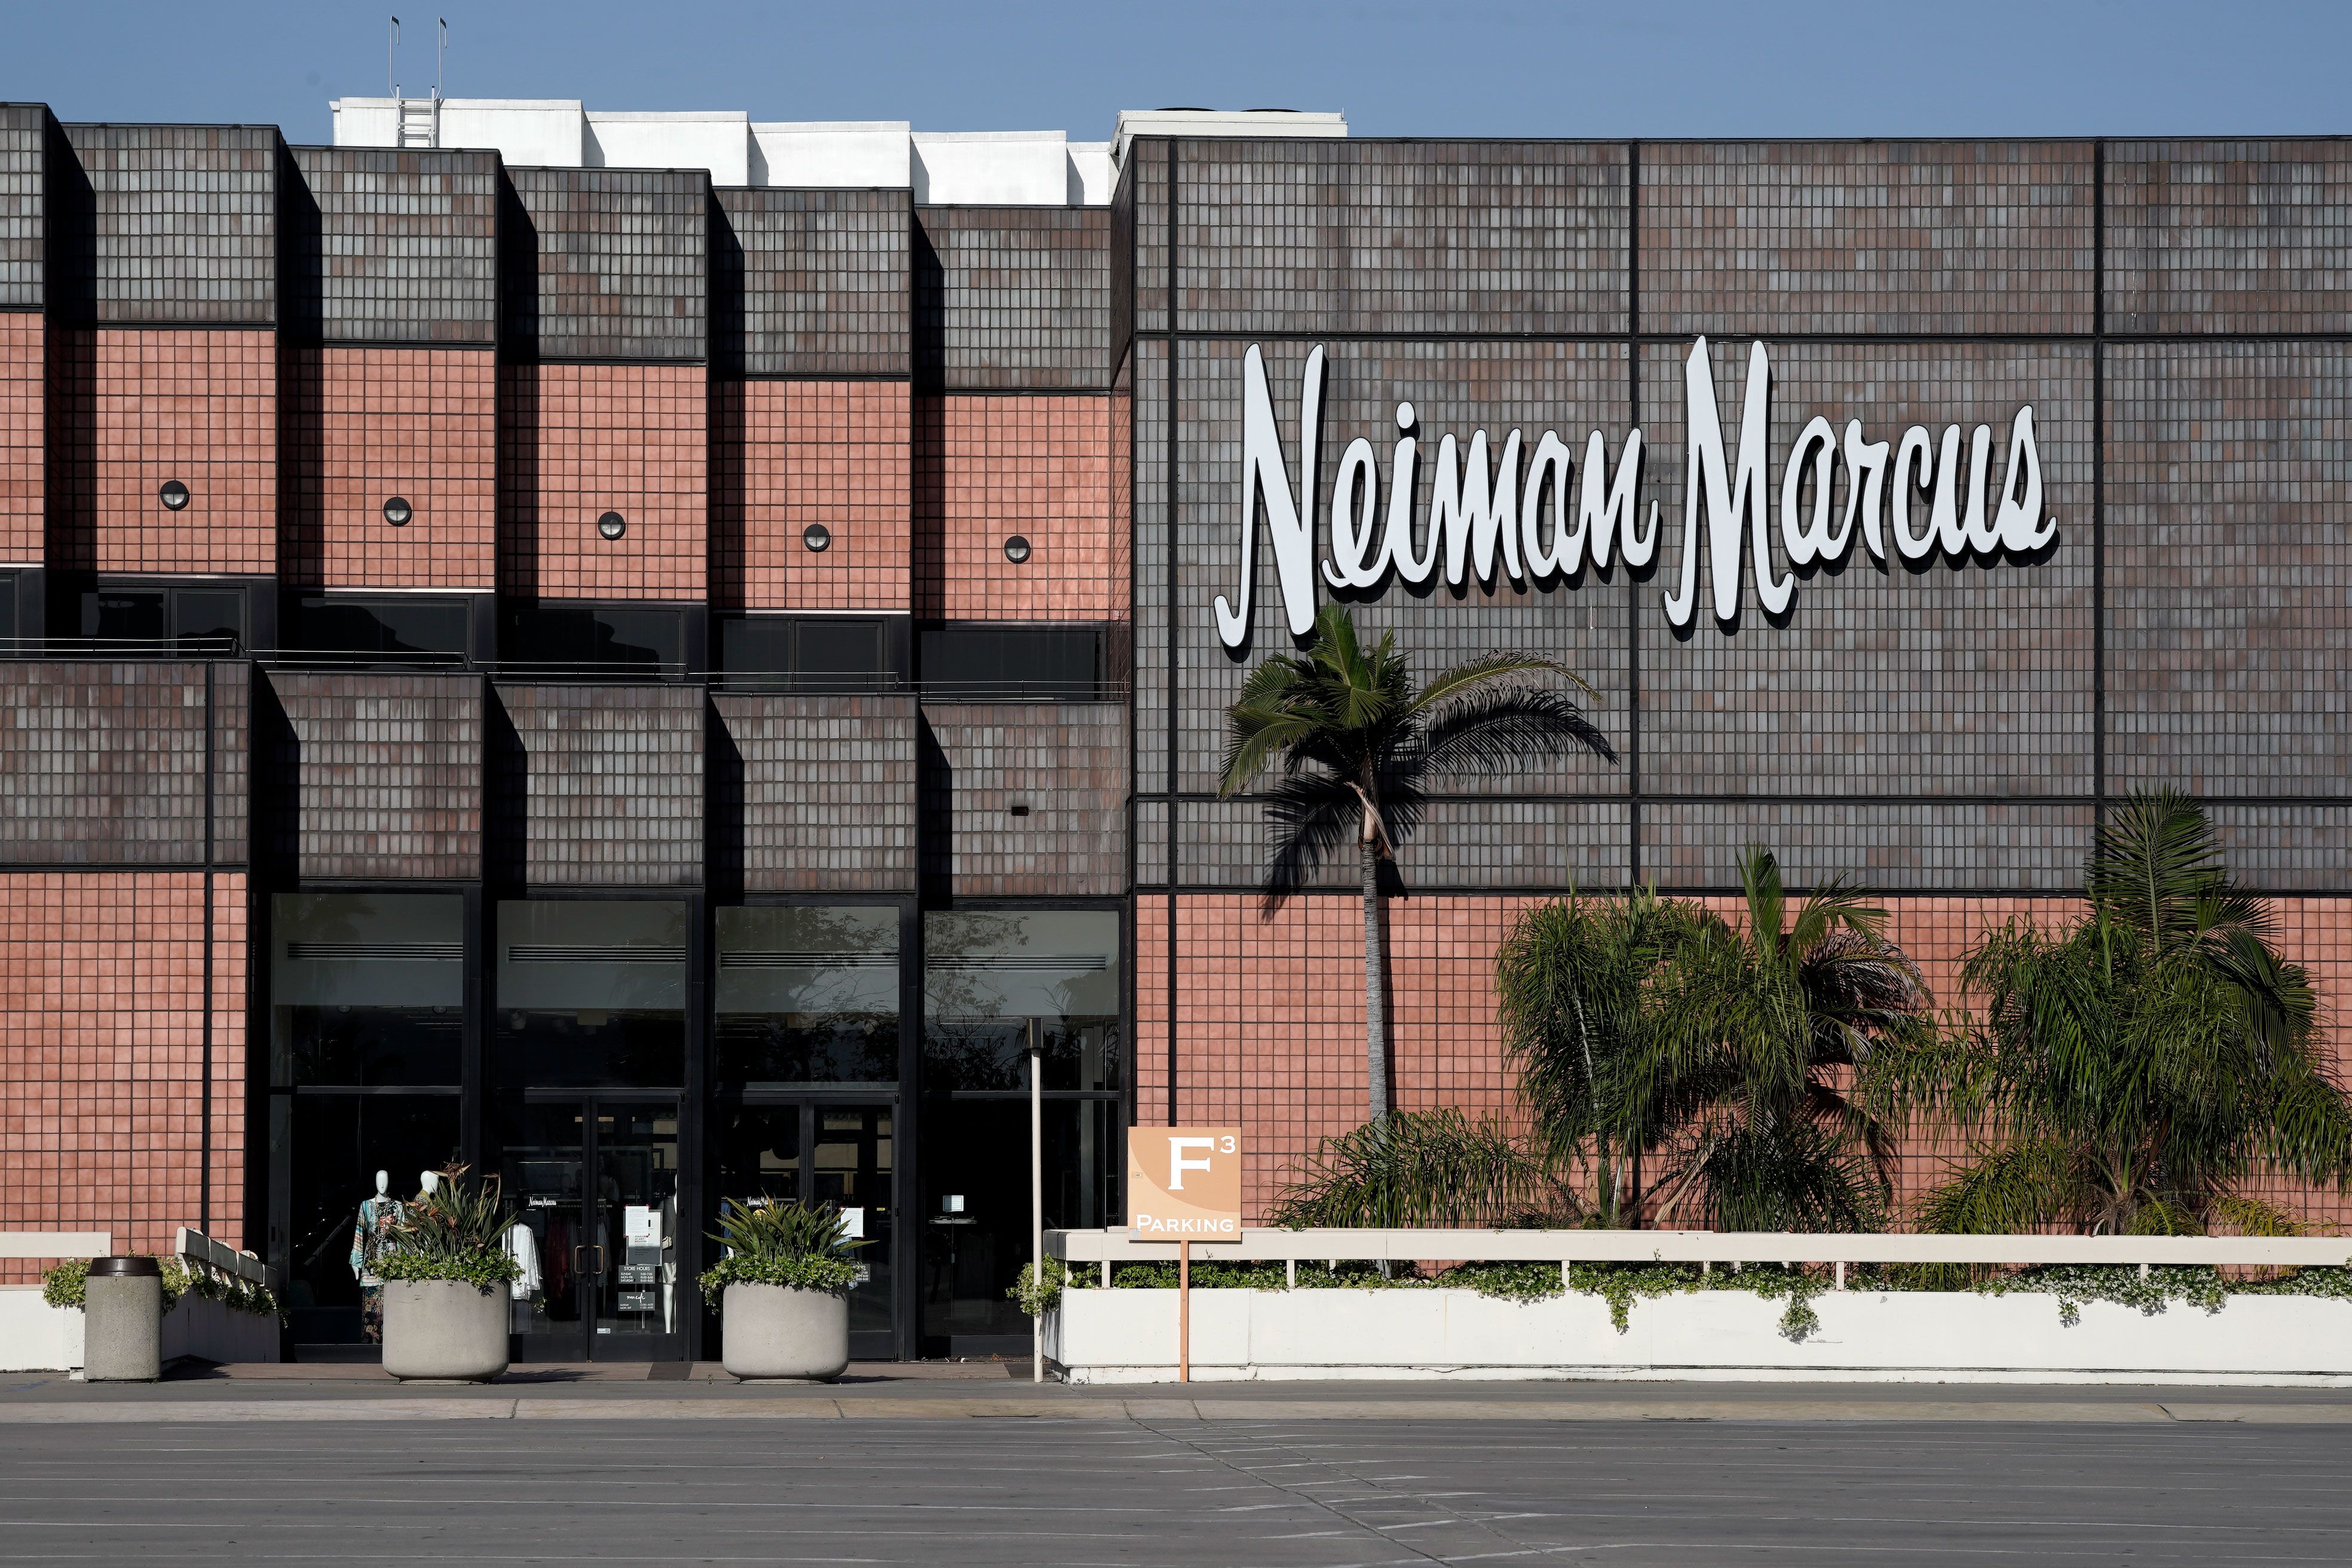 Neiman Marcus Building - Wikipedia